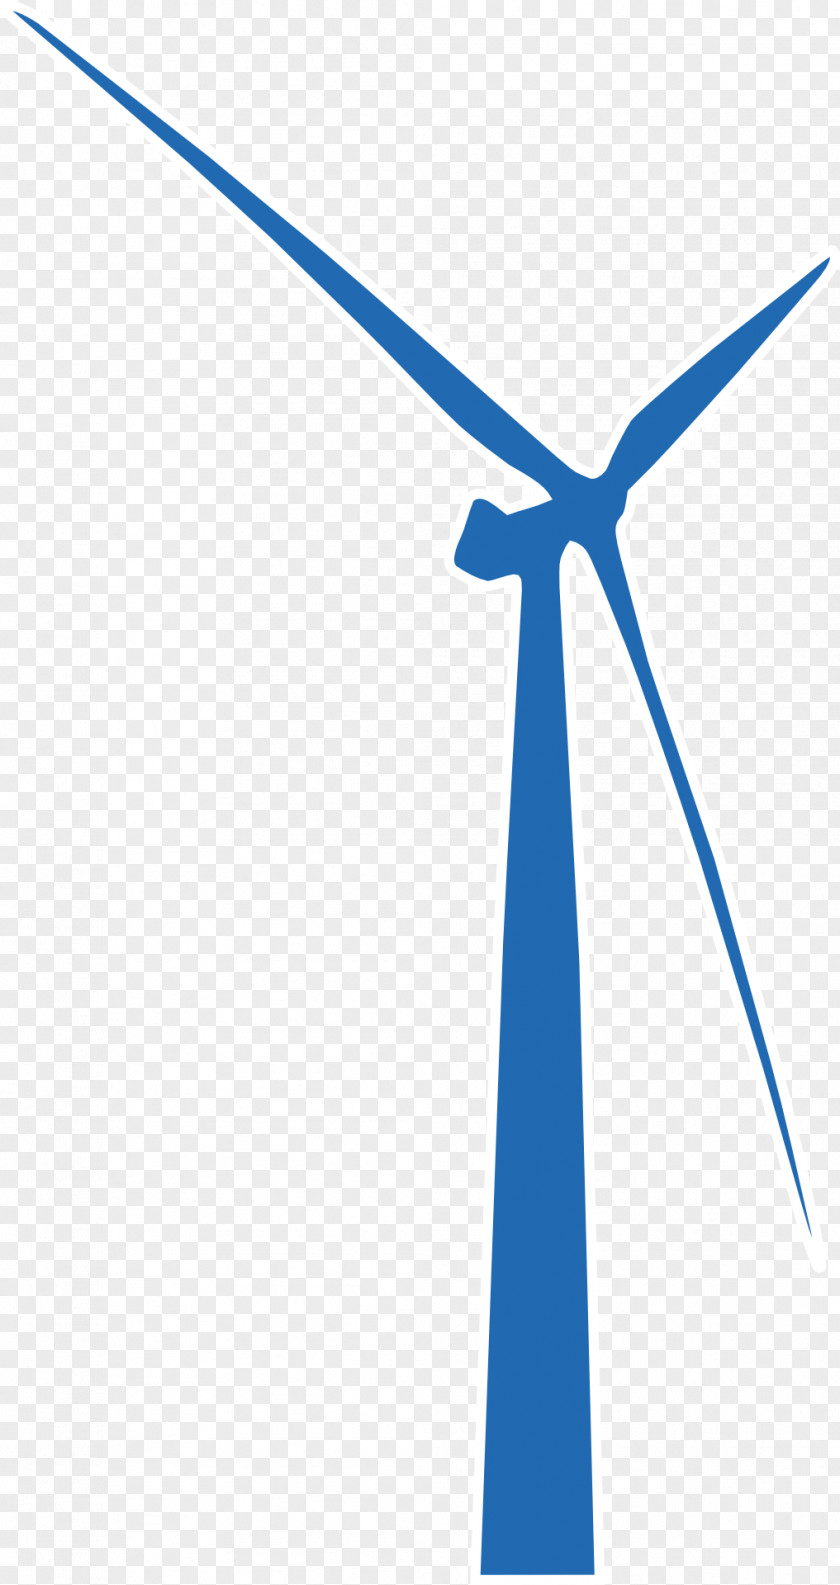 Wind Turbine Energy Power Electric Generator PNG